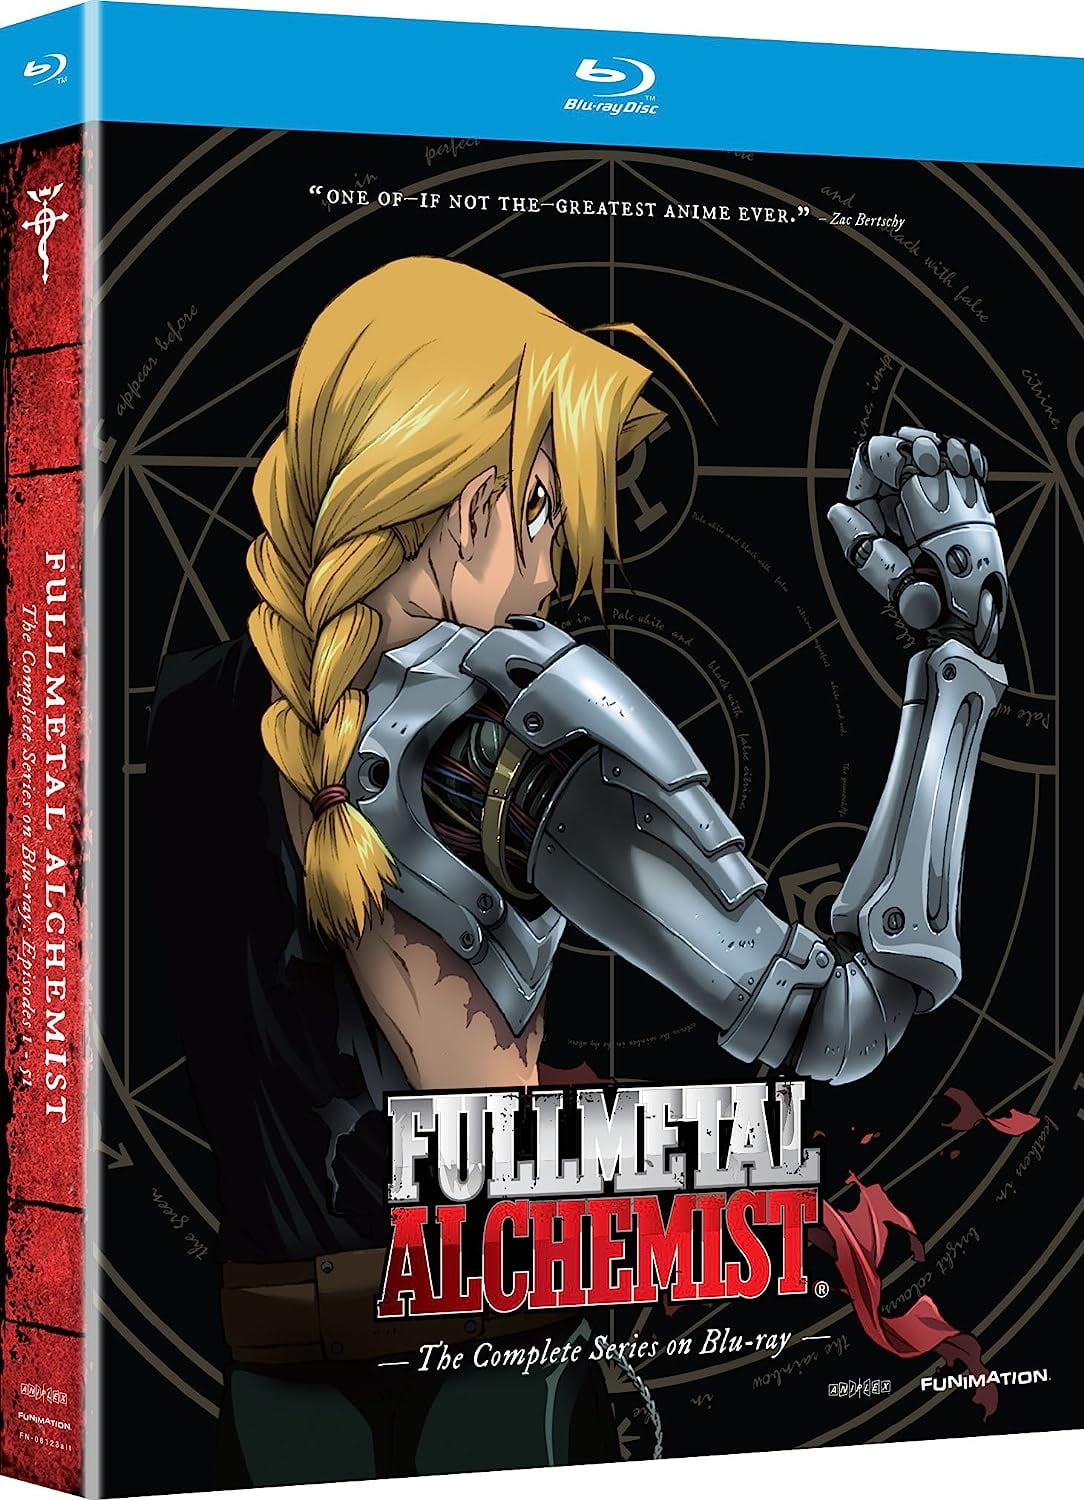 Read Manga Online for Free  Fullmetal alchemist, Fullmetal alchemist  brotherhood, Alchemist